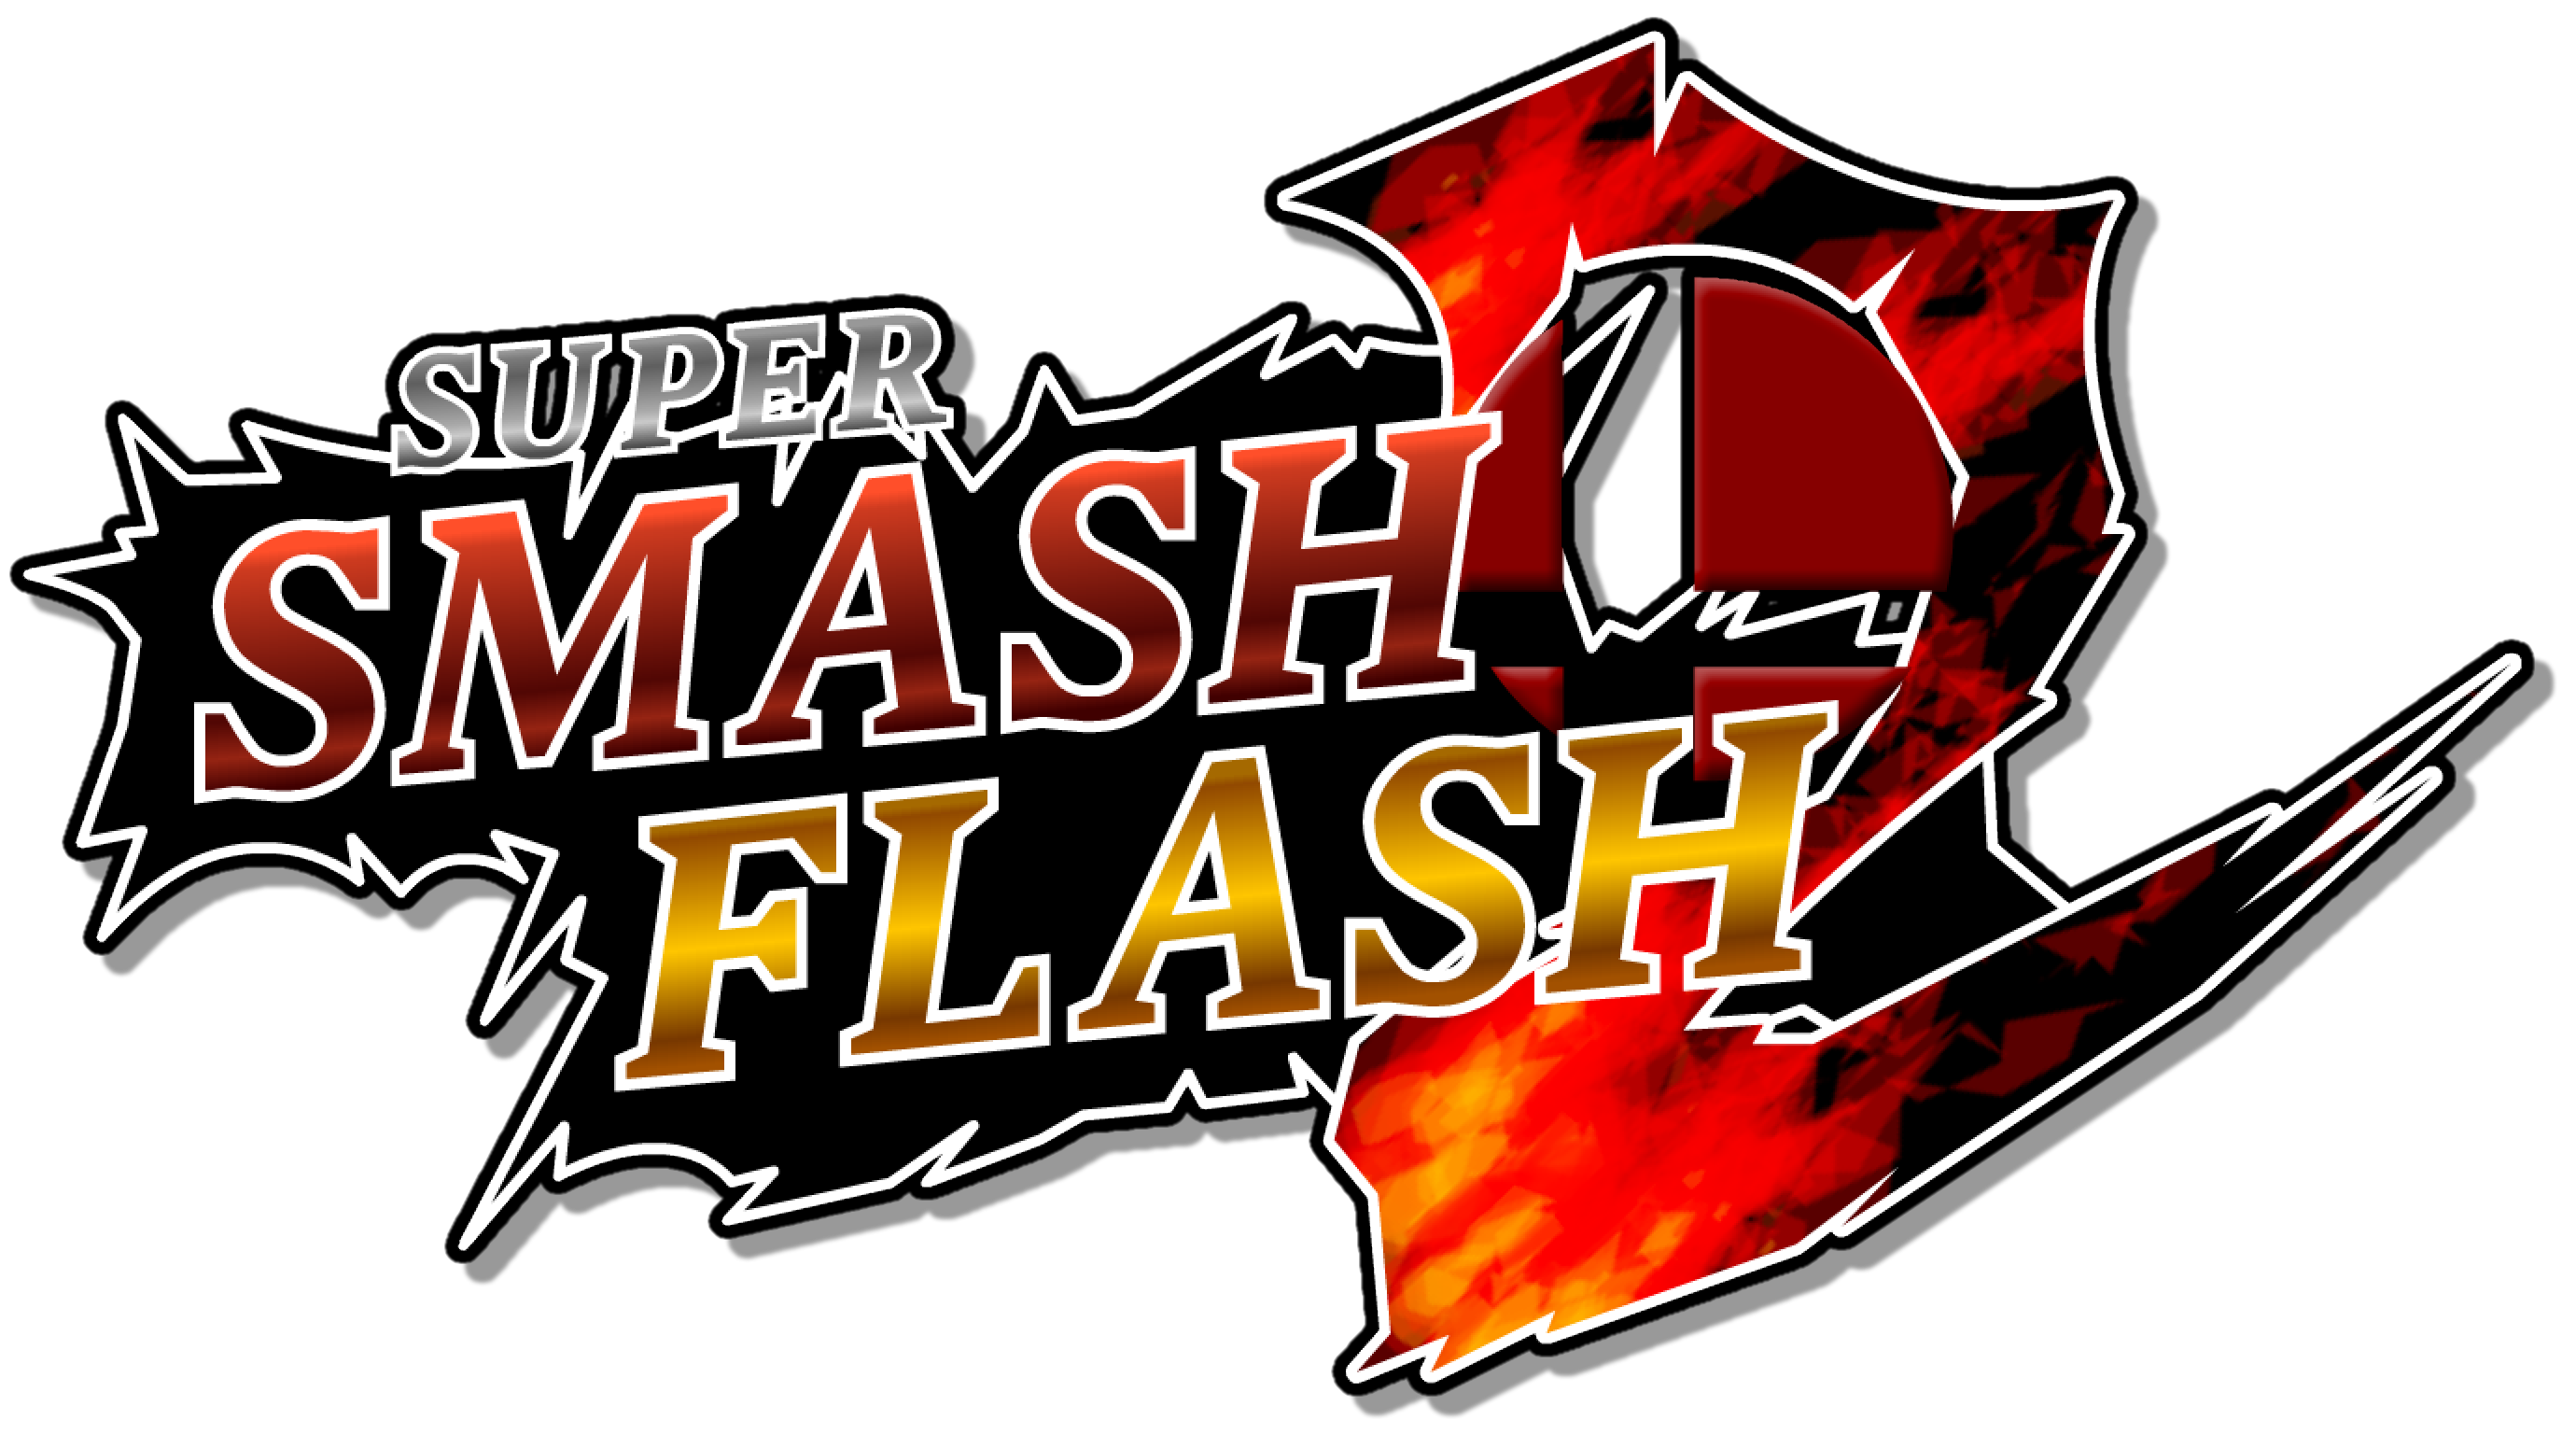 super smash flash 2 beta 1.1 download